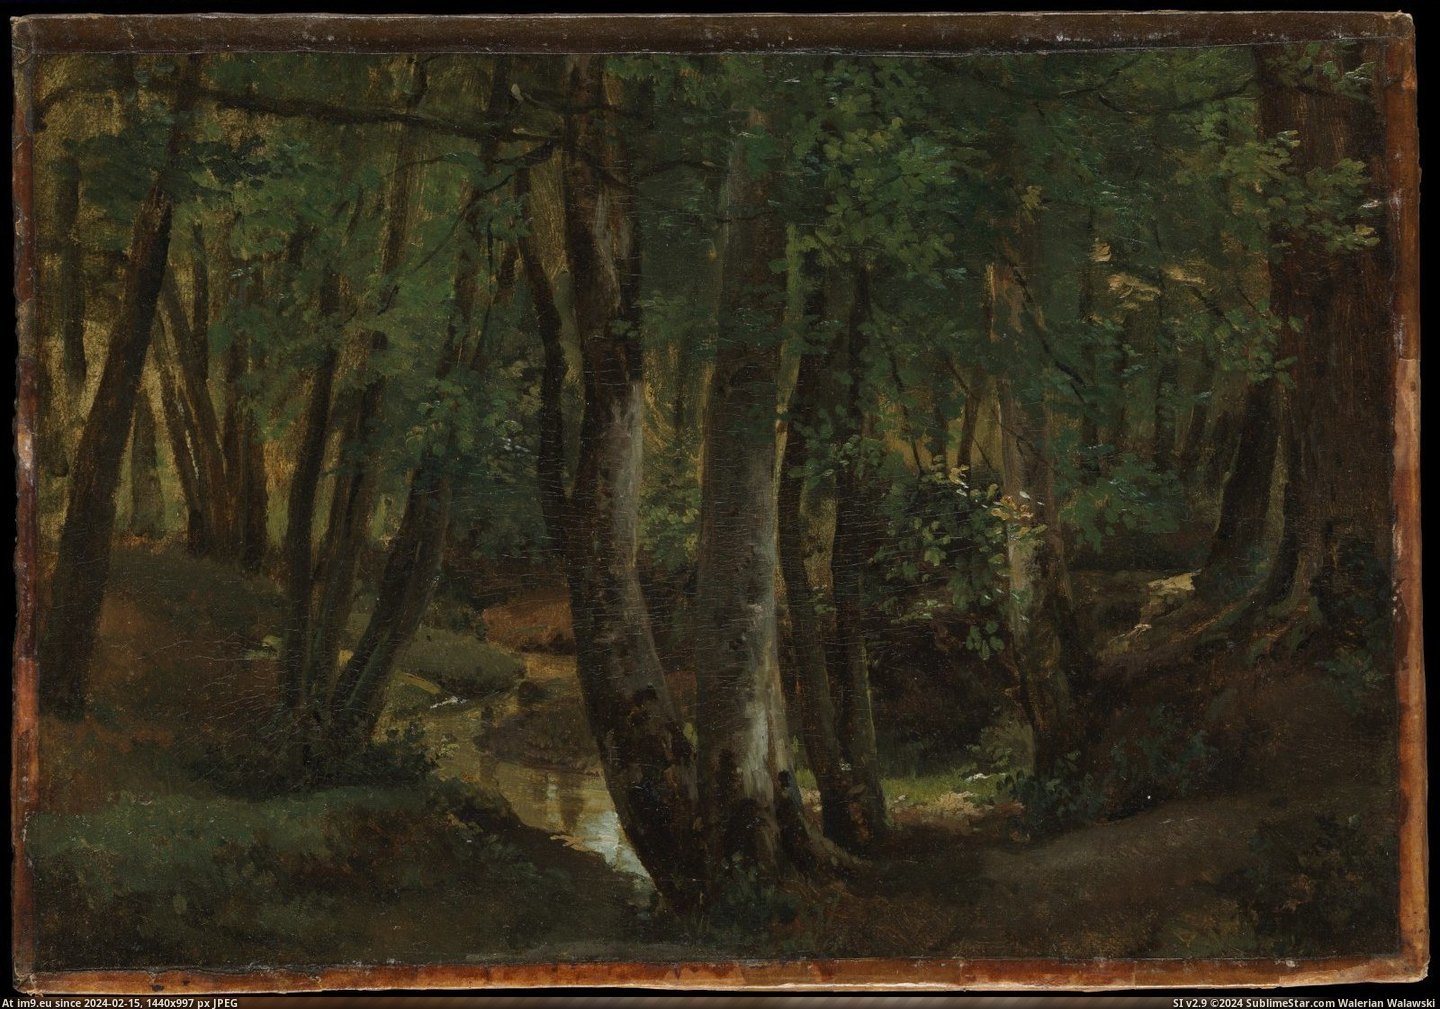 Robert-Léopold Leprince - Interior of a Wood at Pierrefitte (1822) (in Metropolitan Museum Of Art - European Paintings)